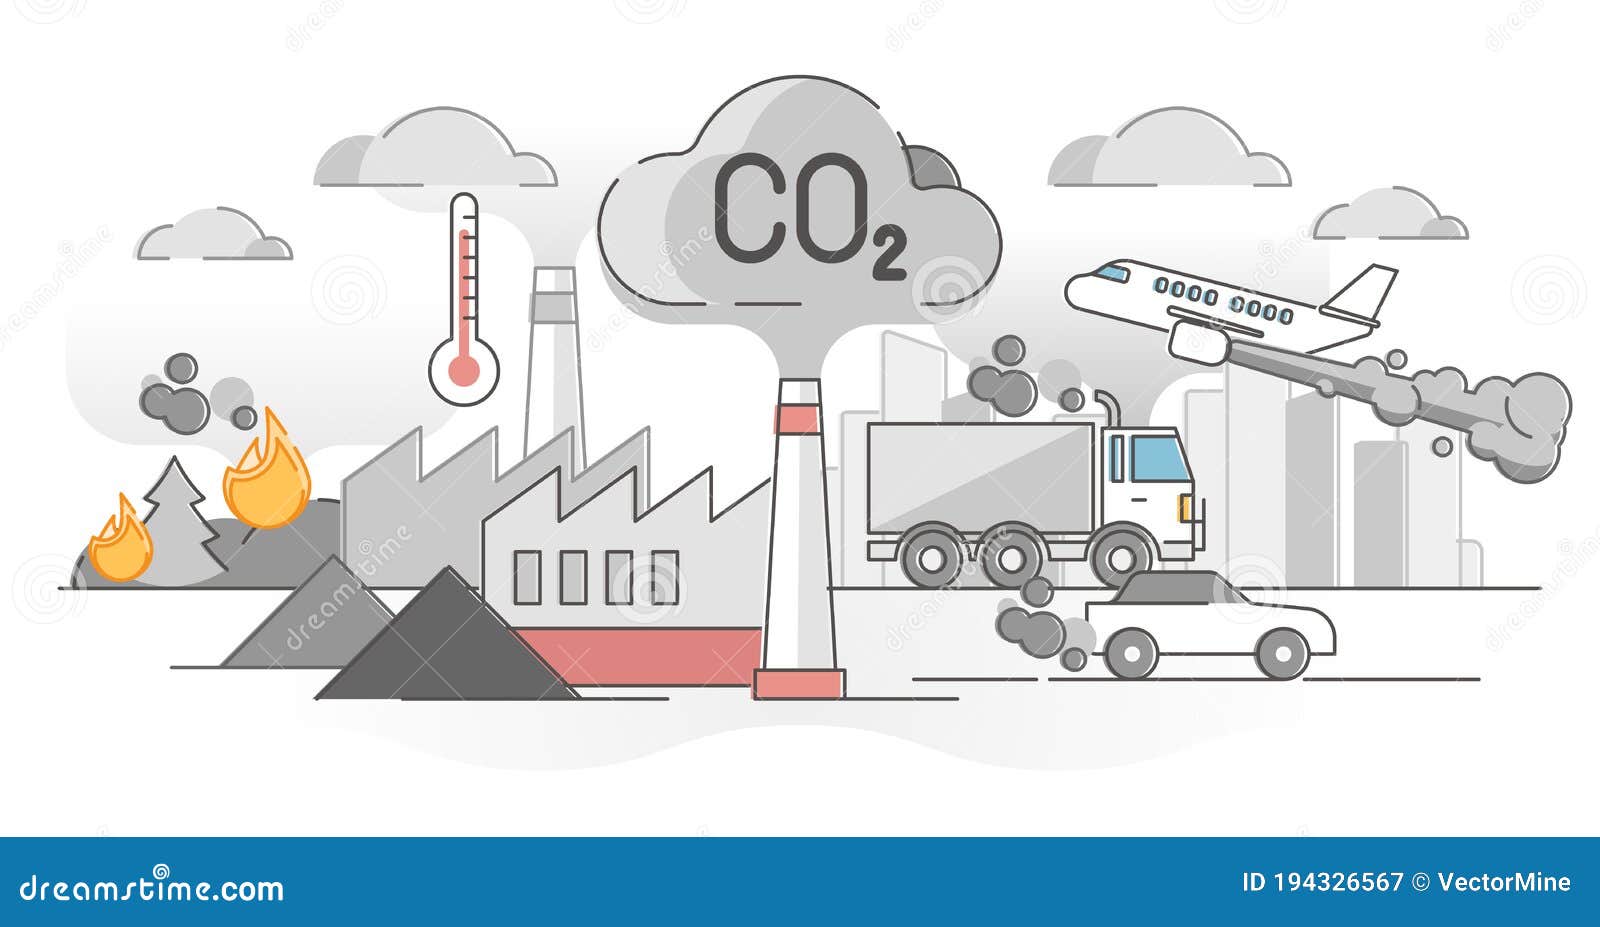 co2 carbon dioxide emissions global air climate pollution outline concept